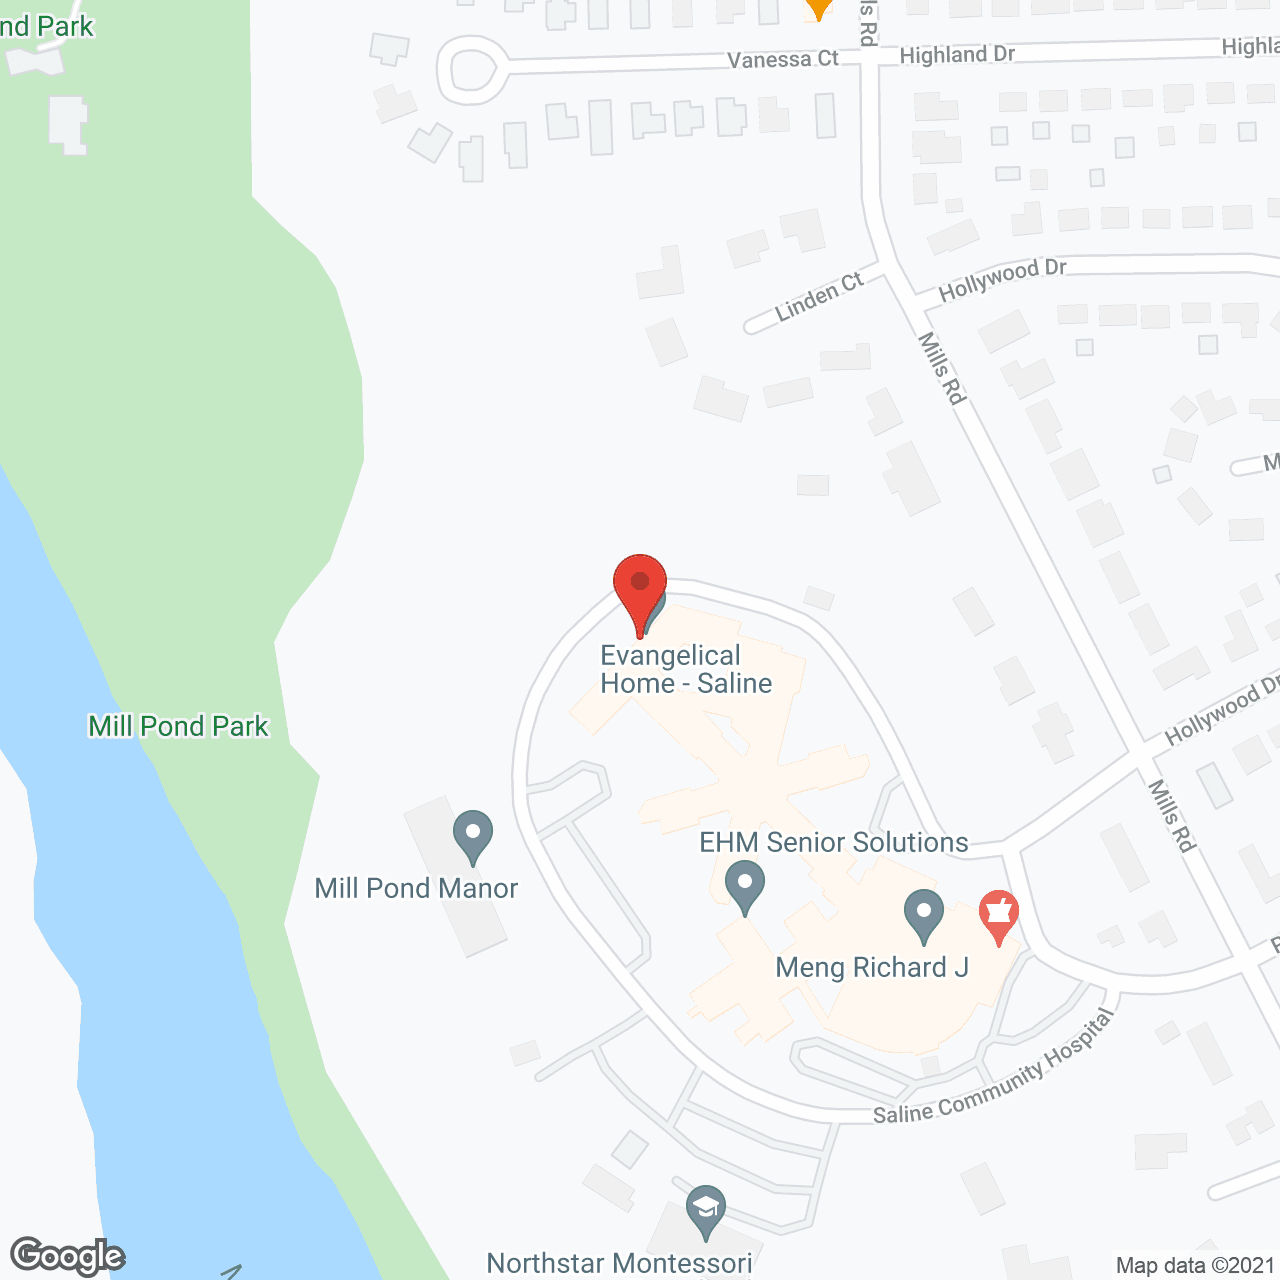 Evangelical Home-Saline in google map